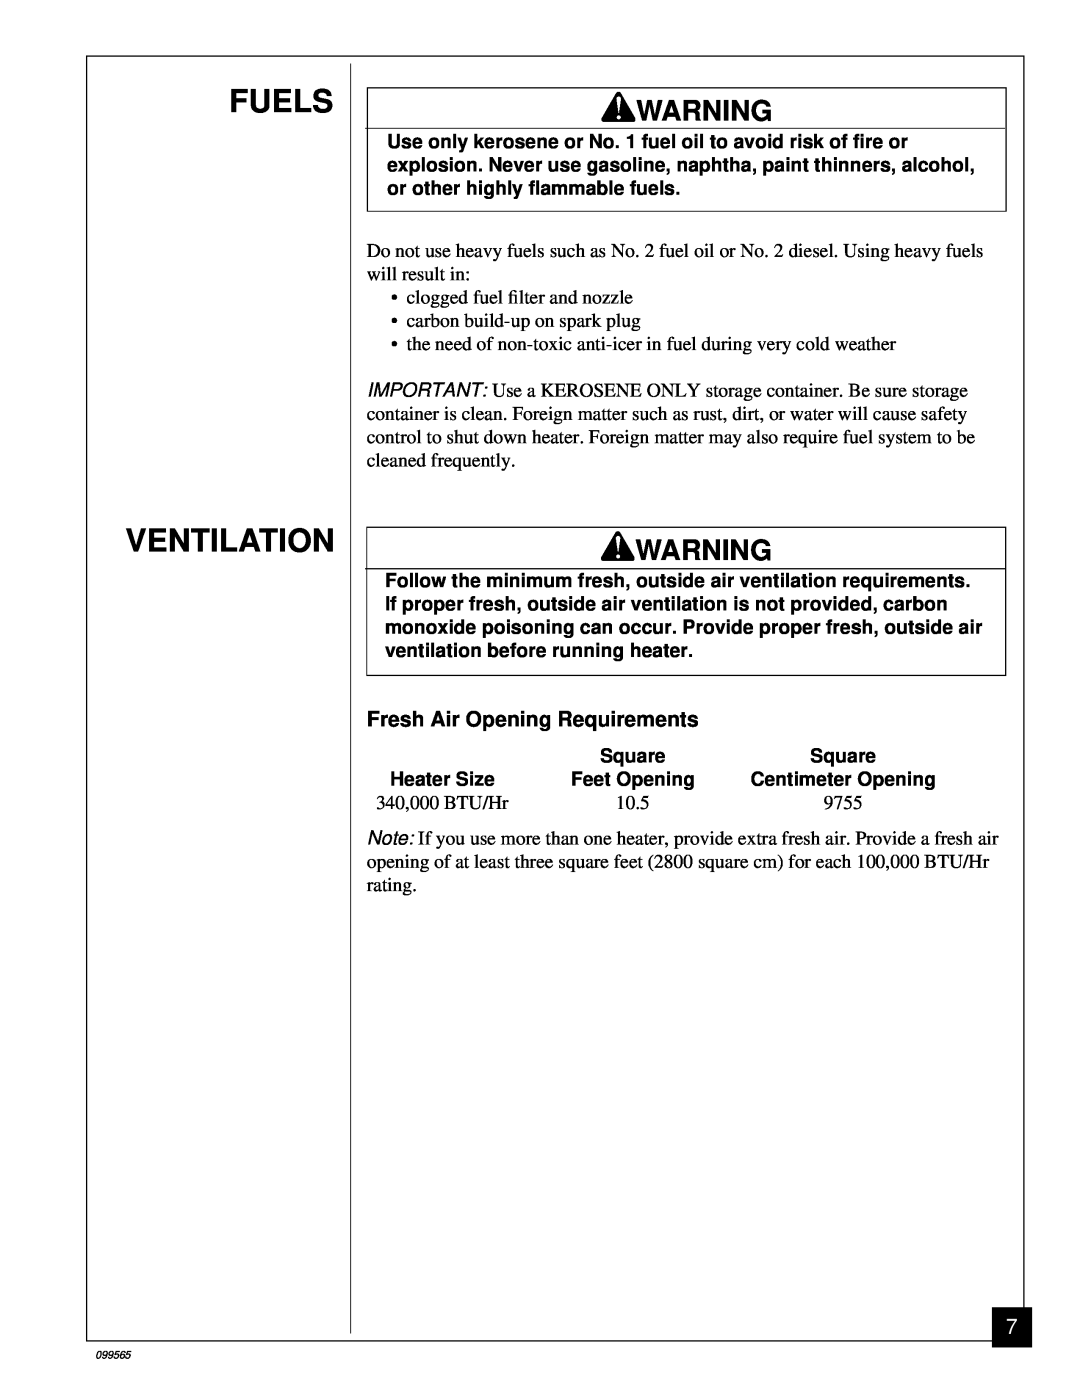 Master Lock B350EAI owner manual Fuels Ventilation, Fresh Air Opening Requirements, 340,000 BTU/Hr, 10.5, 9755 